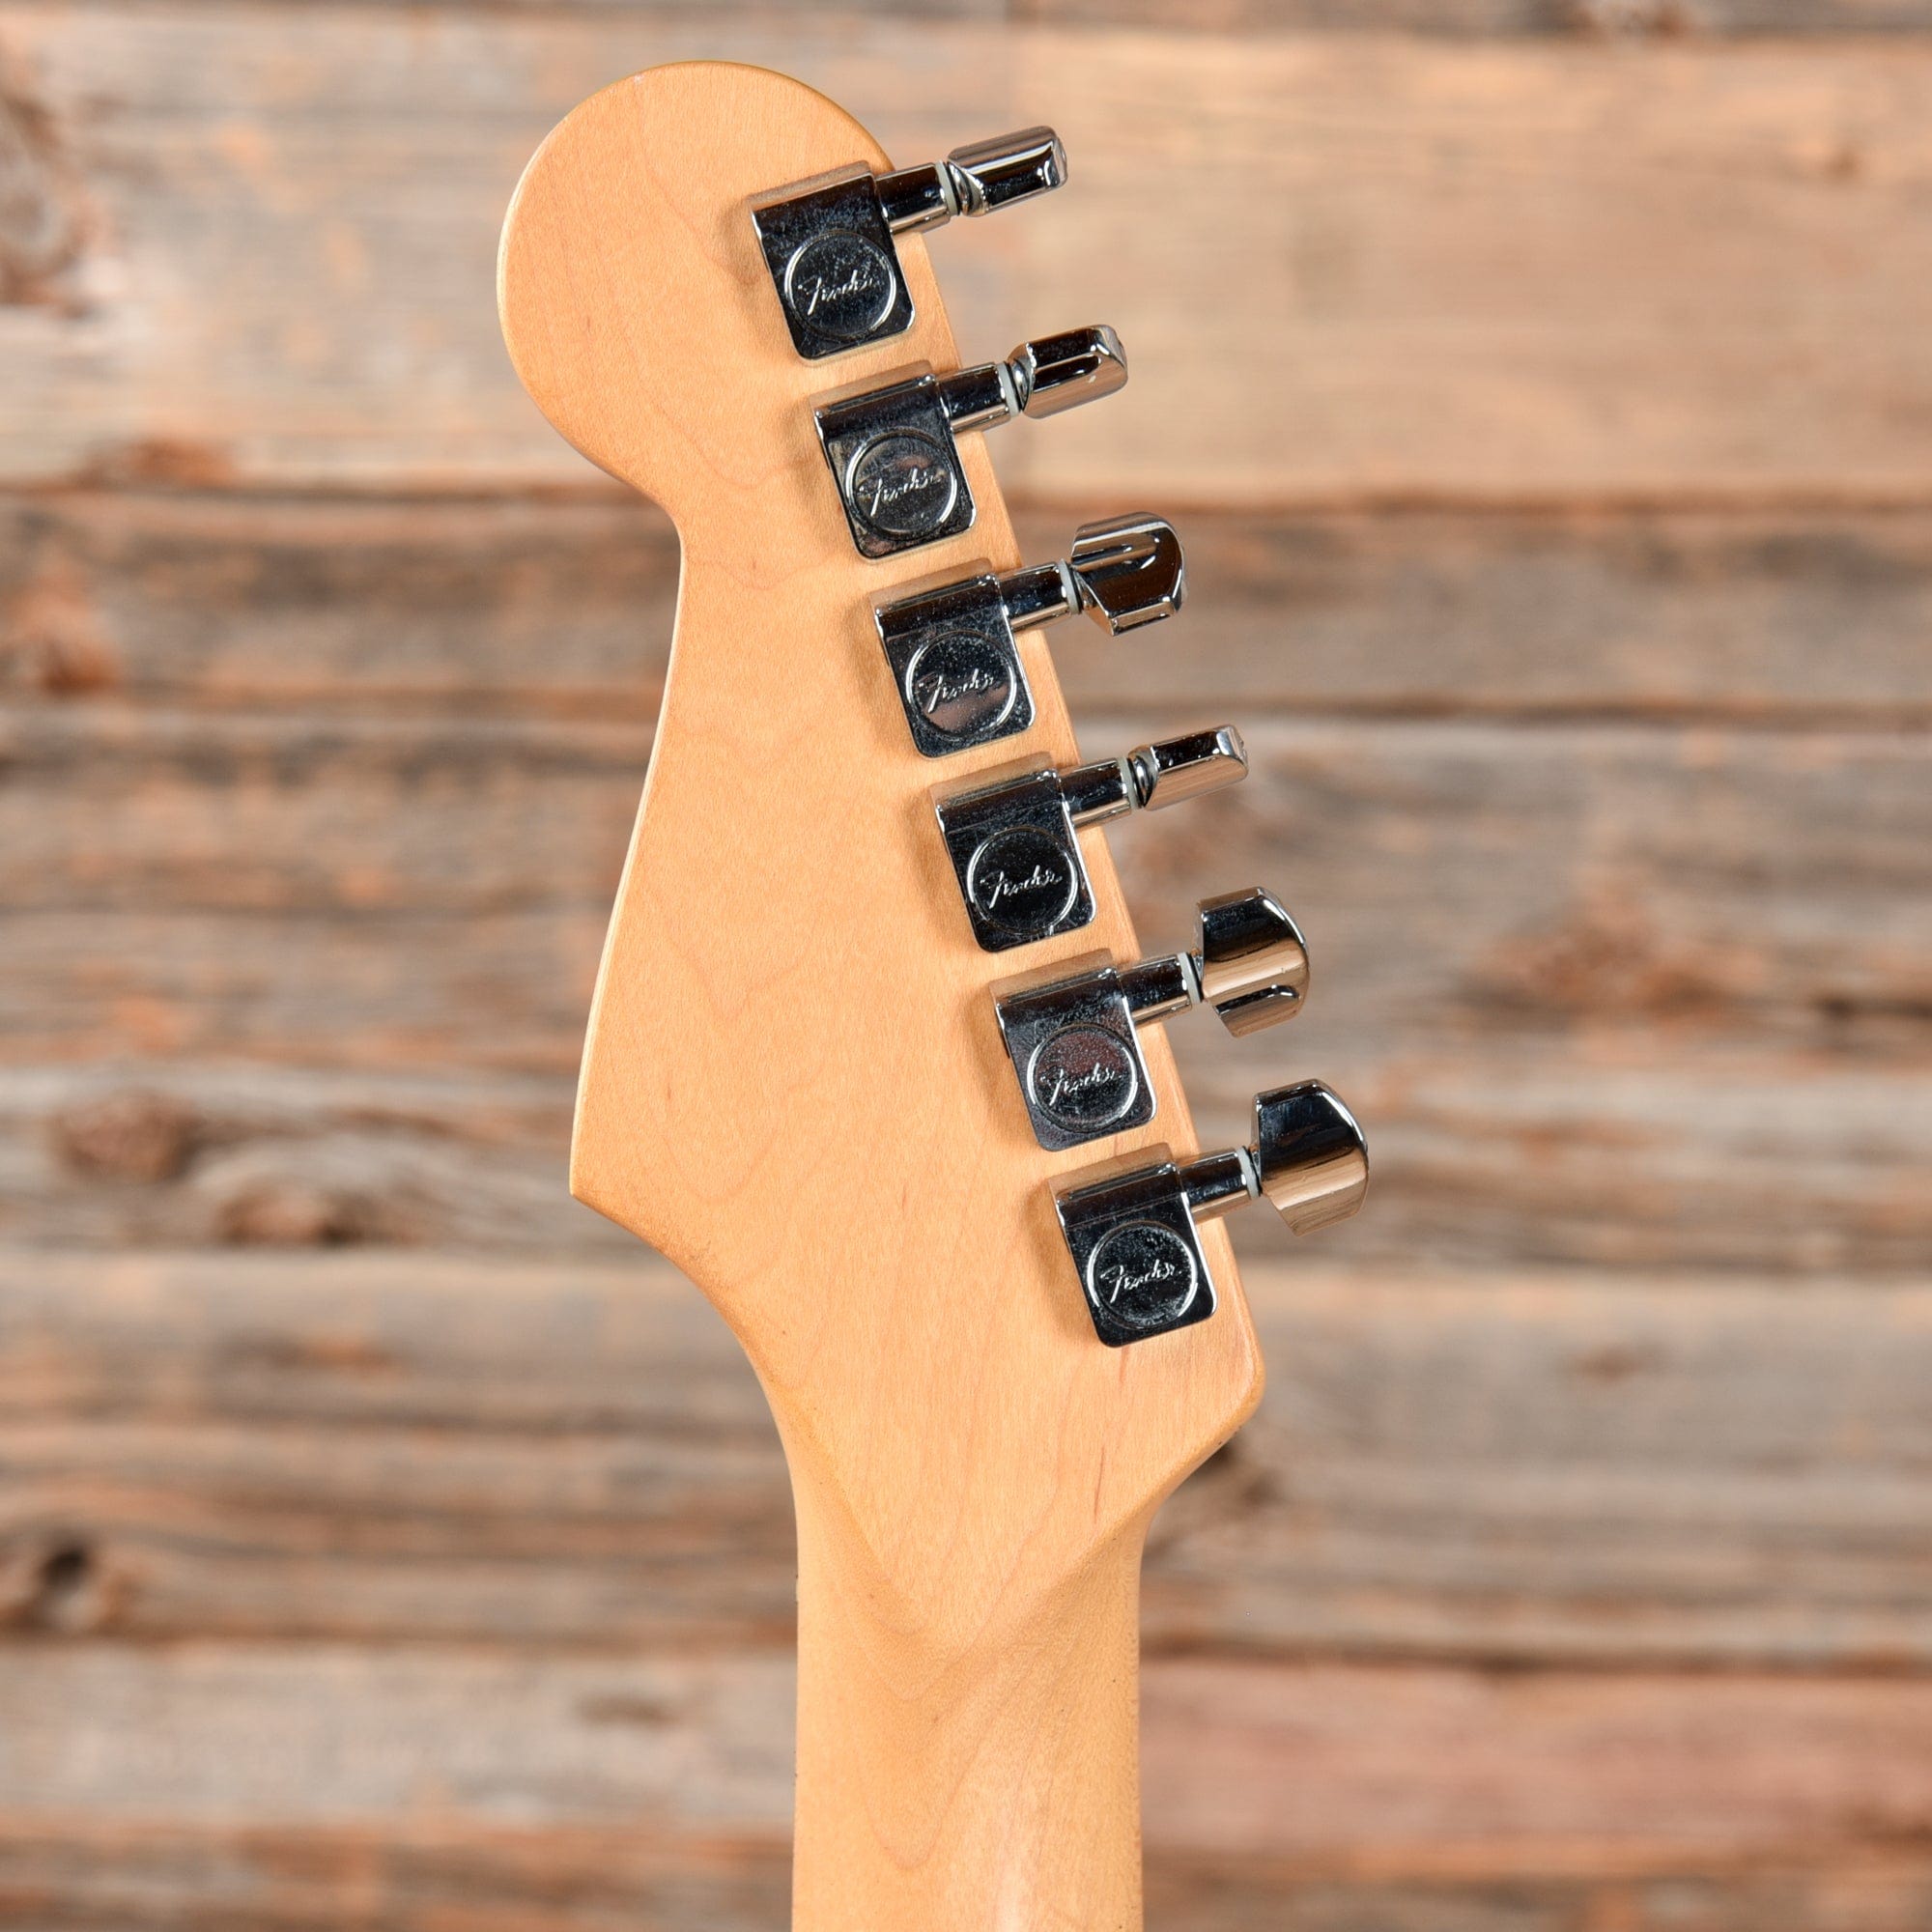 Fender Standard Stratocaster Black 2001 Electric Guitars / Solid Body